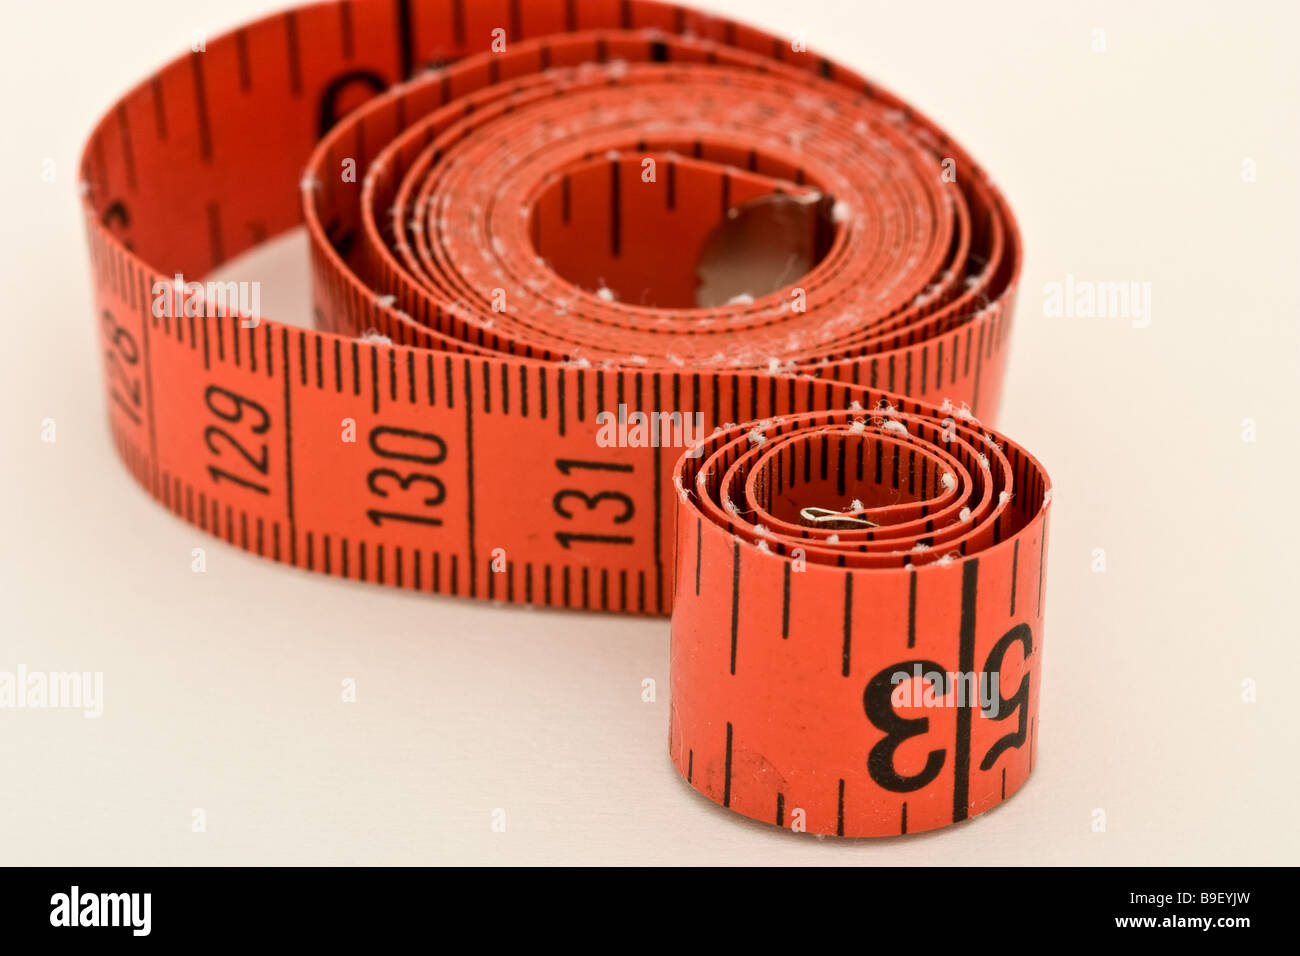 8 Yard Flexible Measuring Tape Stock Photo - Image of orange